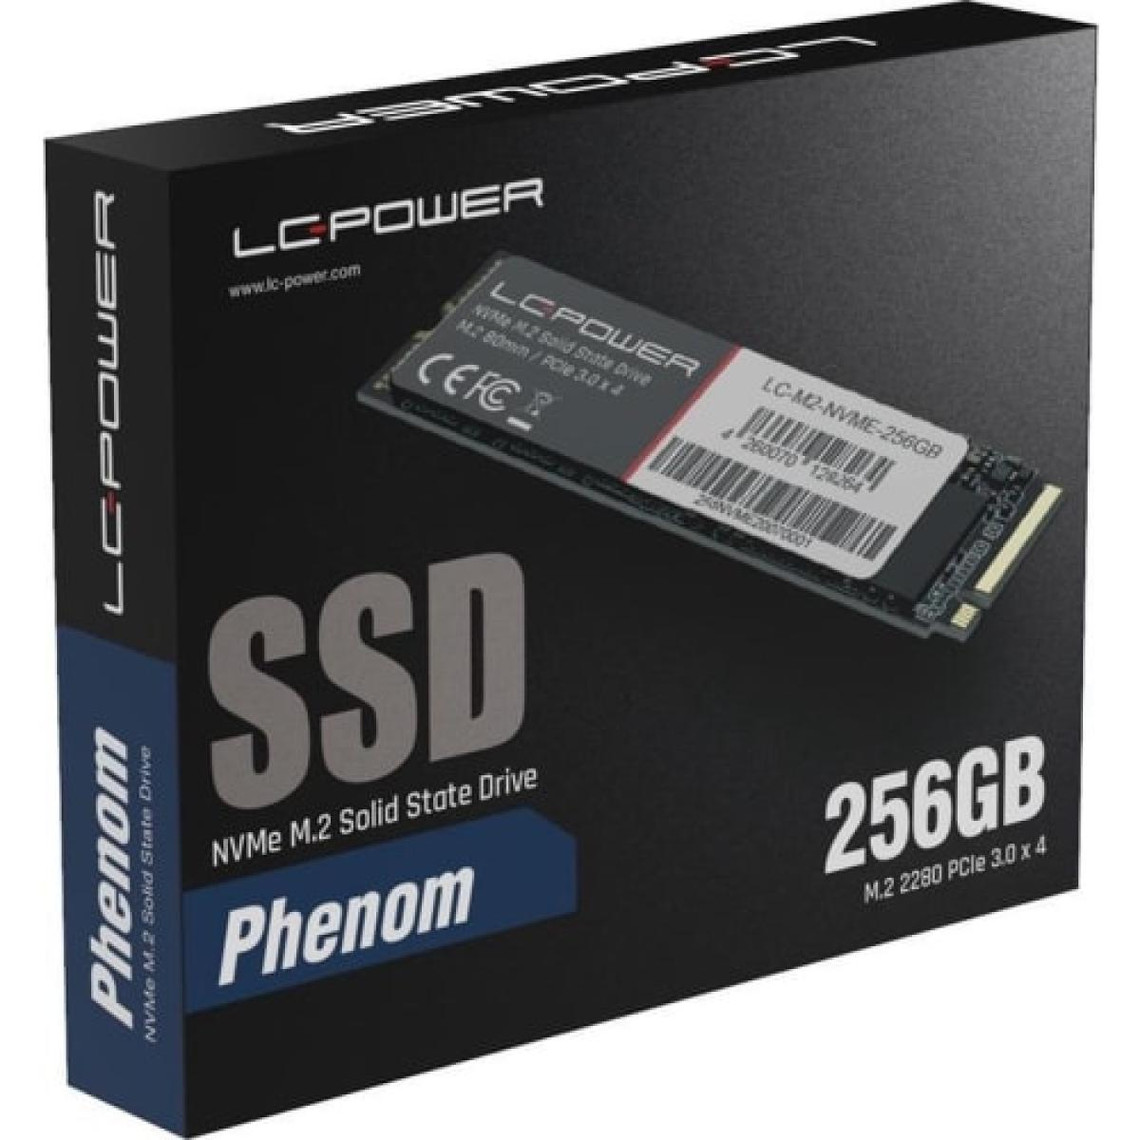 Lc Power Phenom Disque Dur SSD Interne 256Go M.2 NVMe 1600Mo/s PCI Express 3.0 x4 Noir